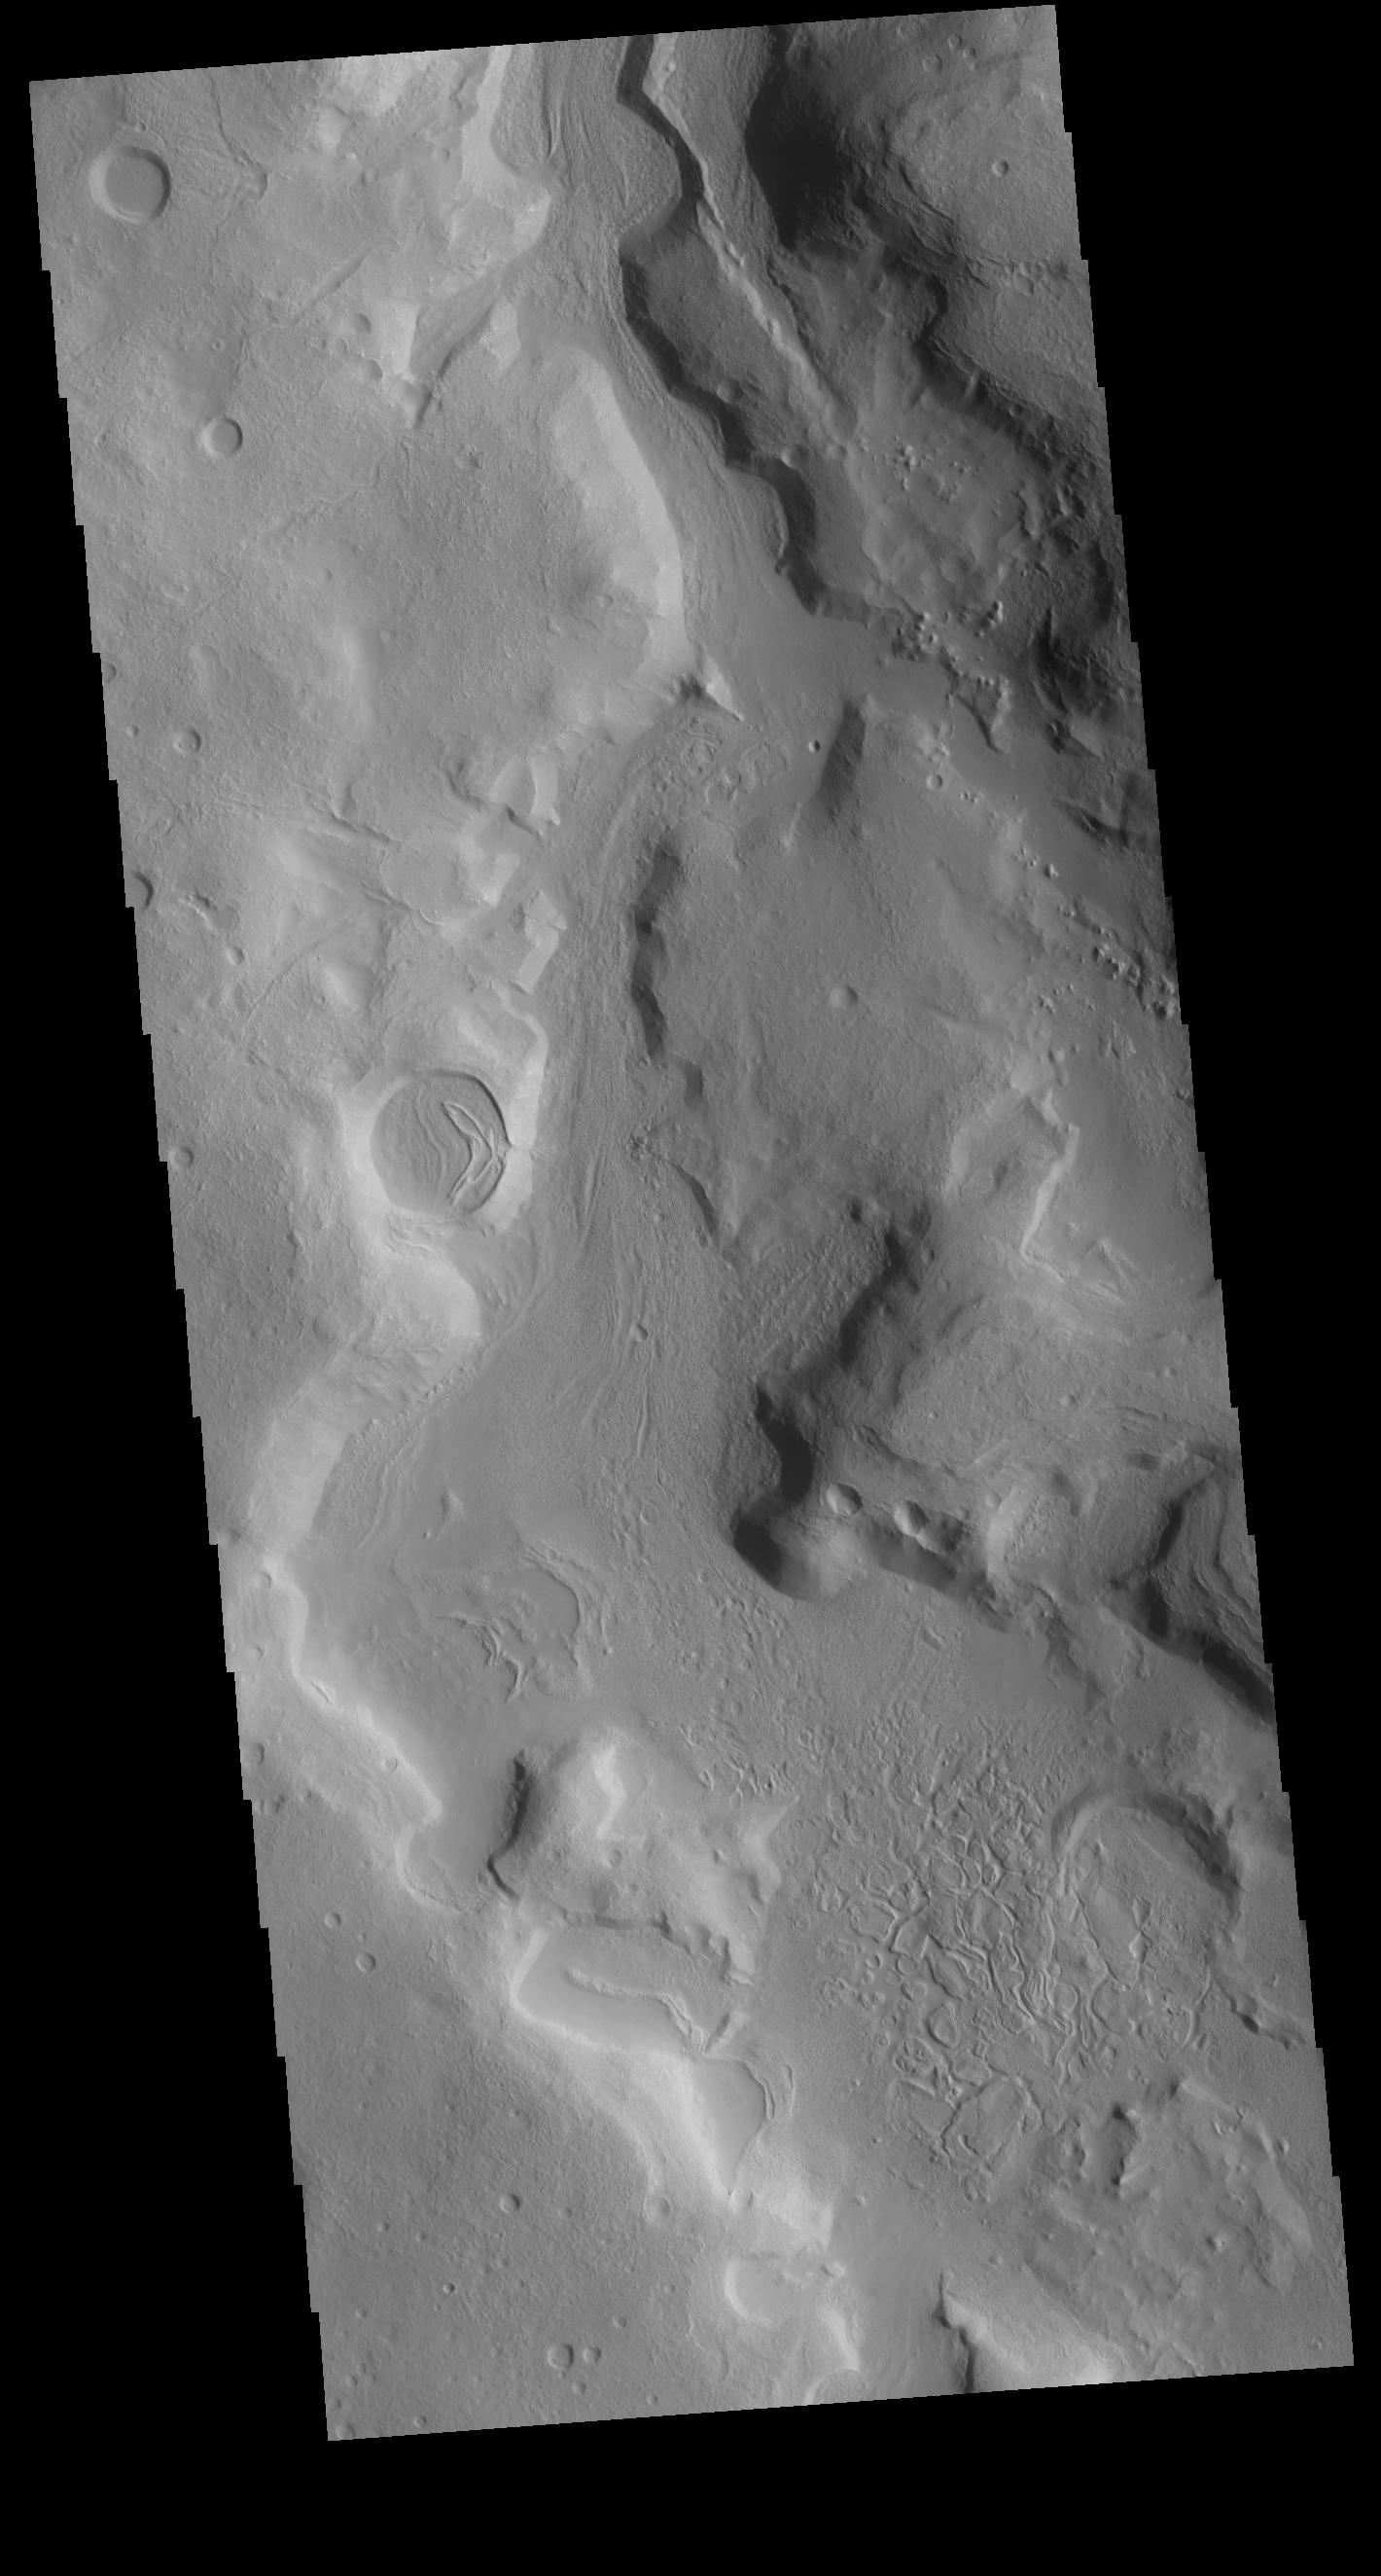 PIA23709: Terra Sabaea Channel